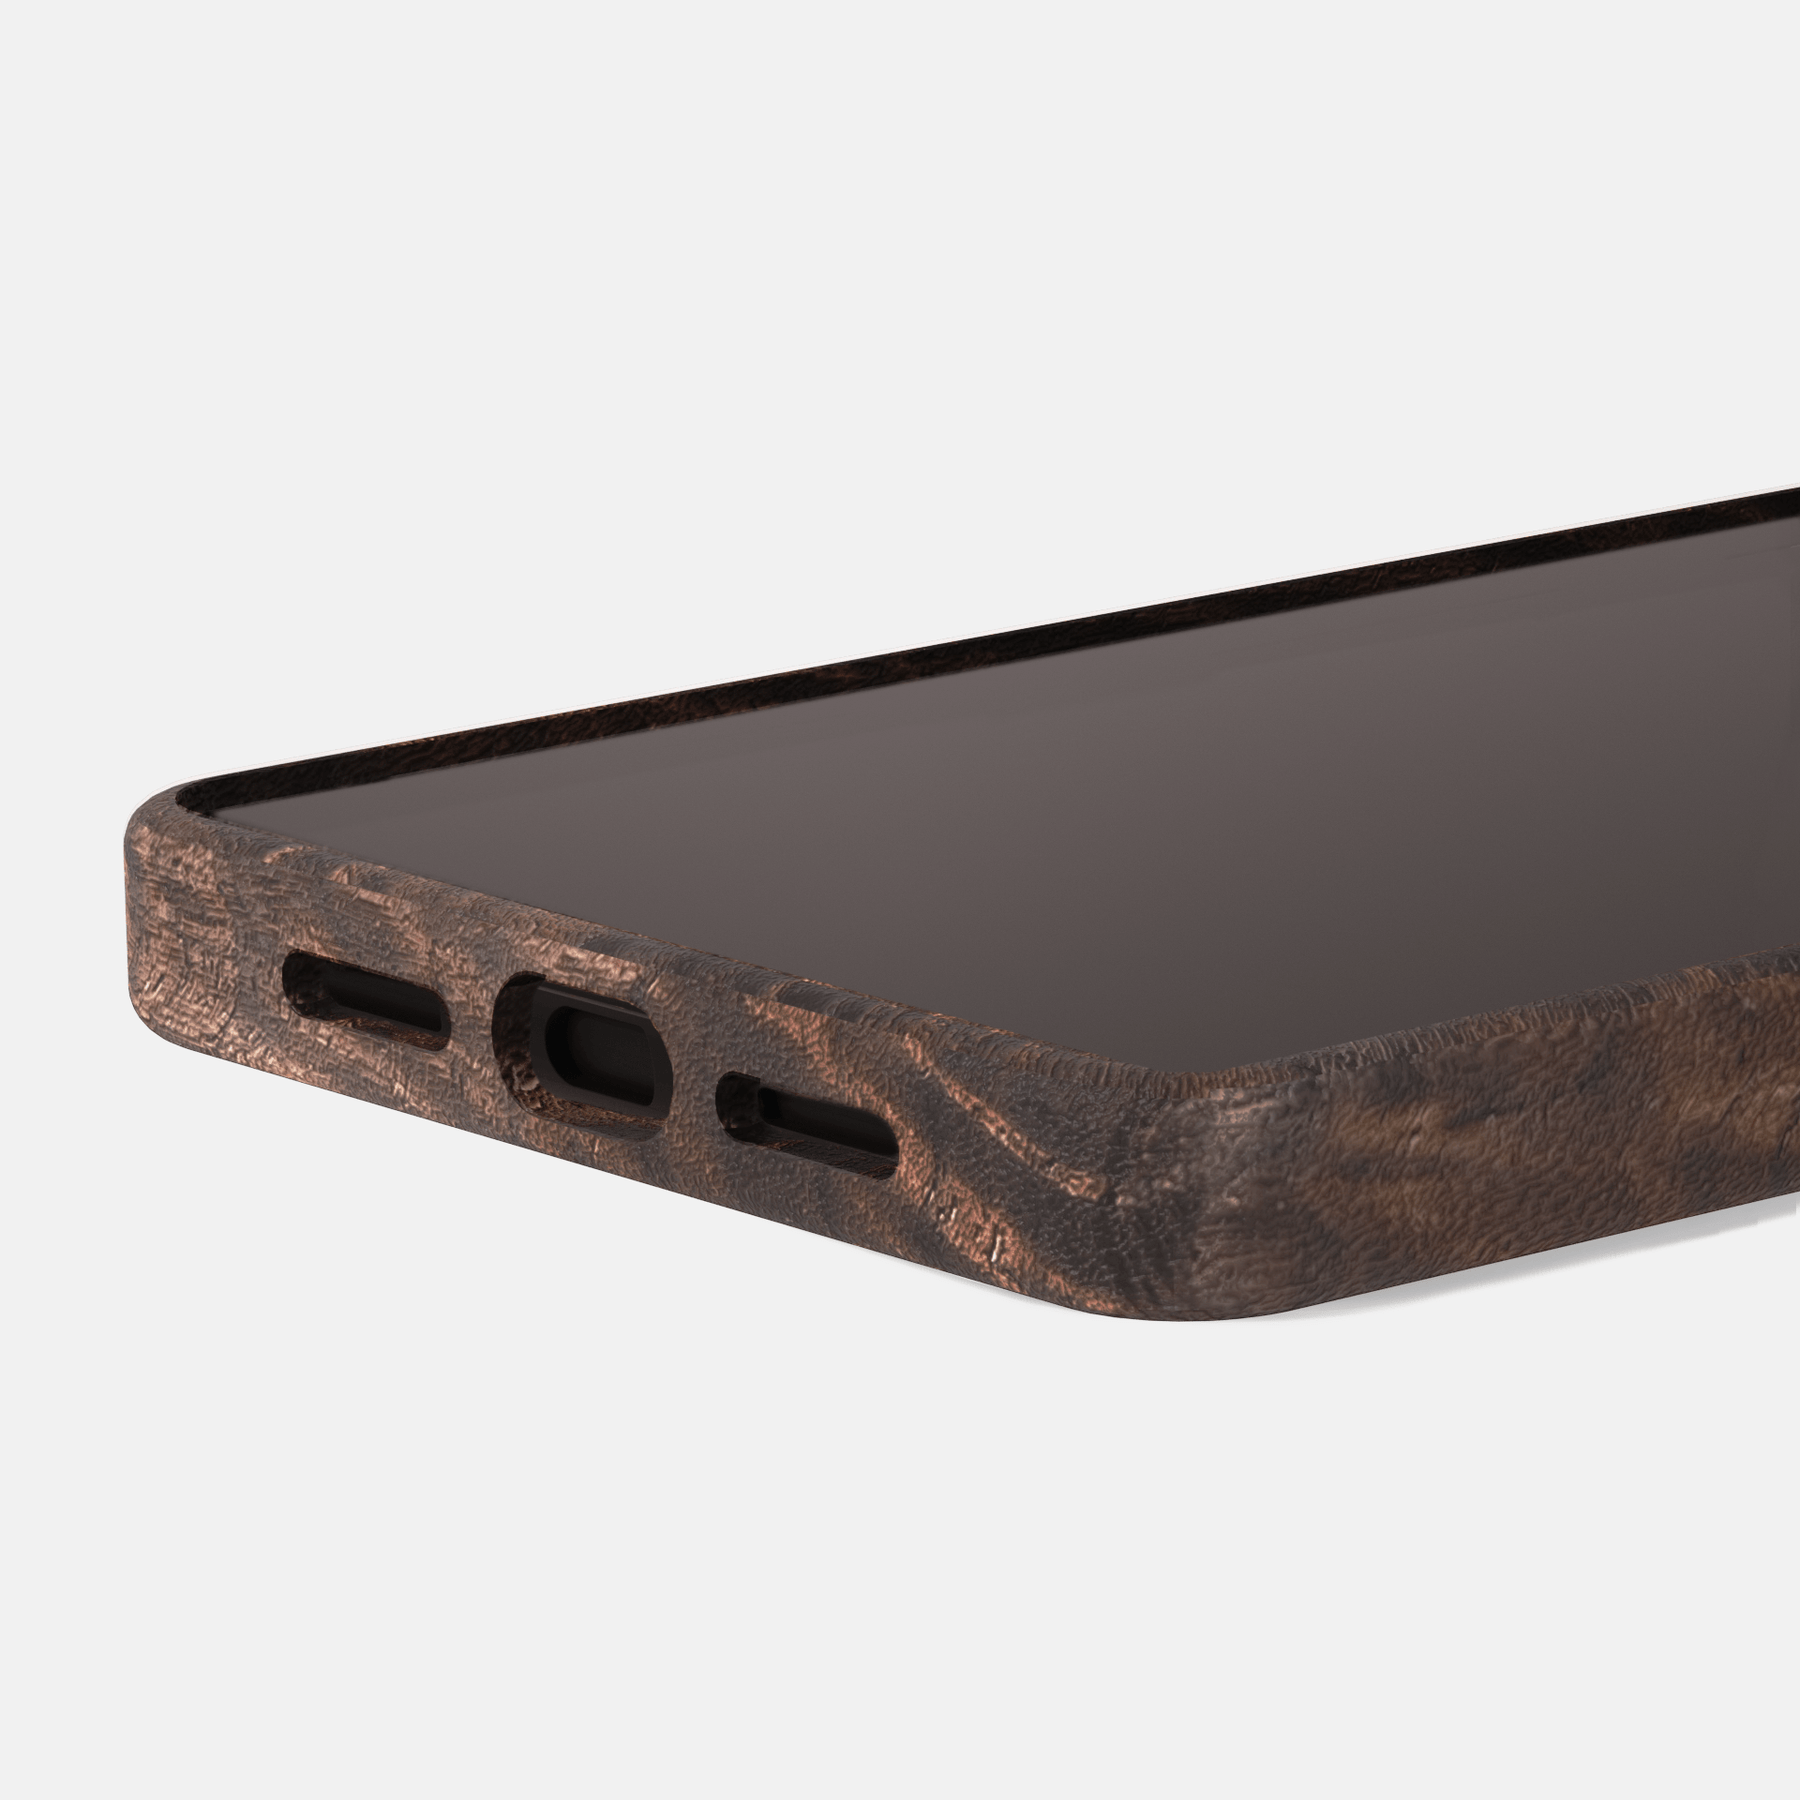 Google Pixel 8 Wood Case